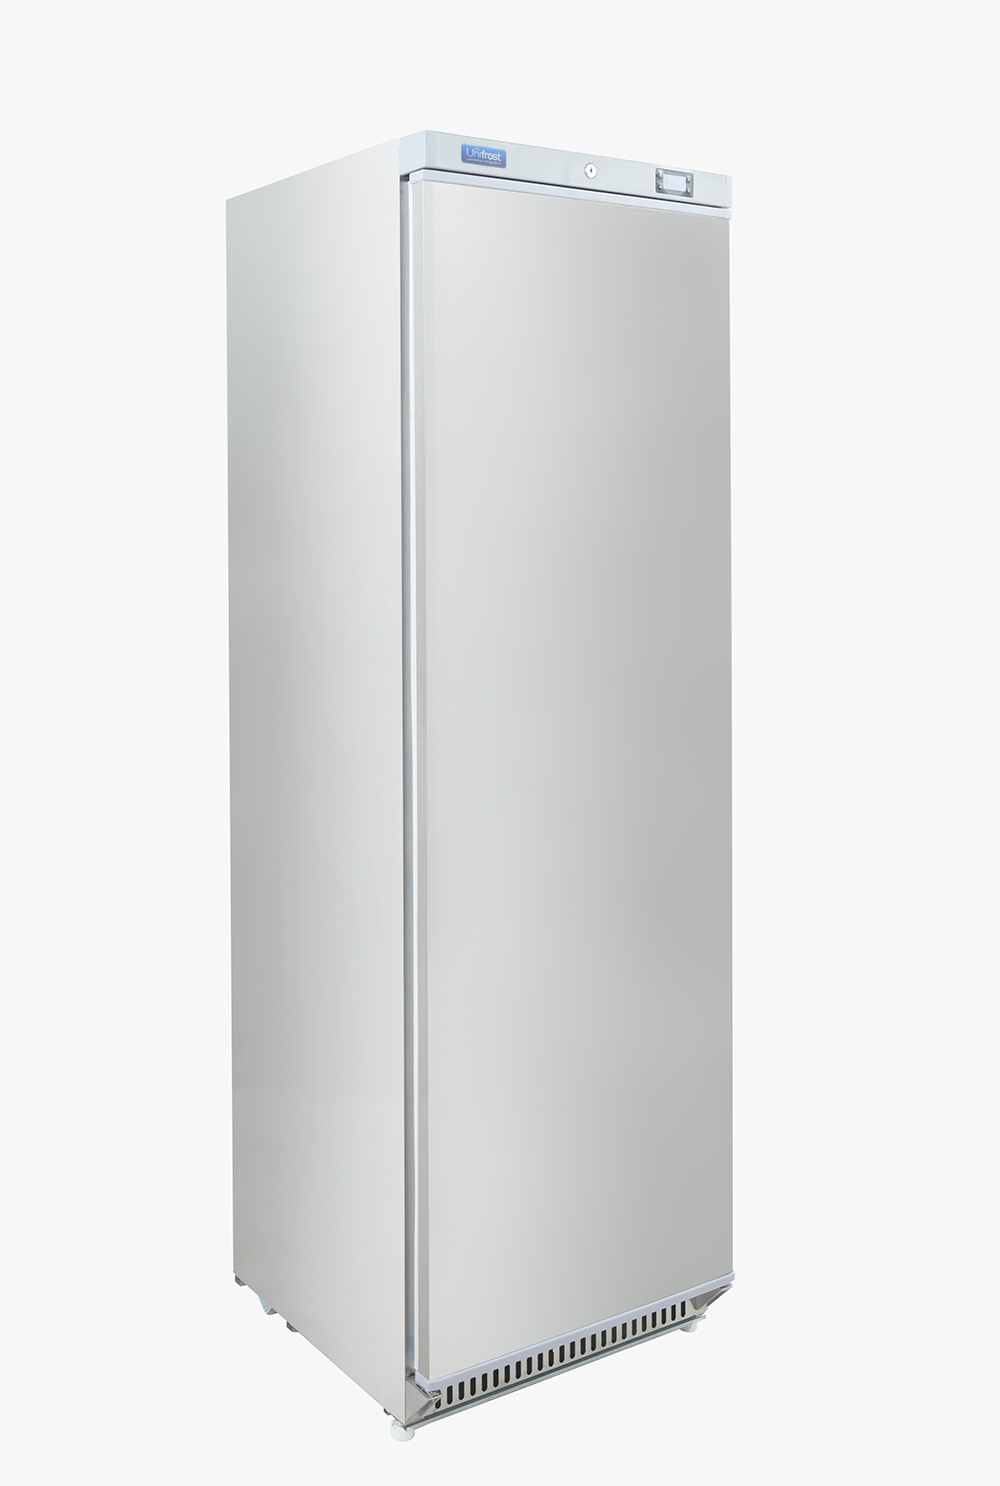 Unifrost F410SS Upright Freezer